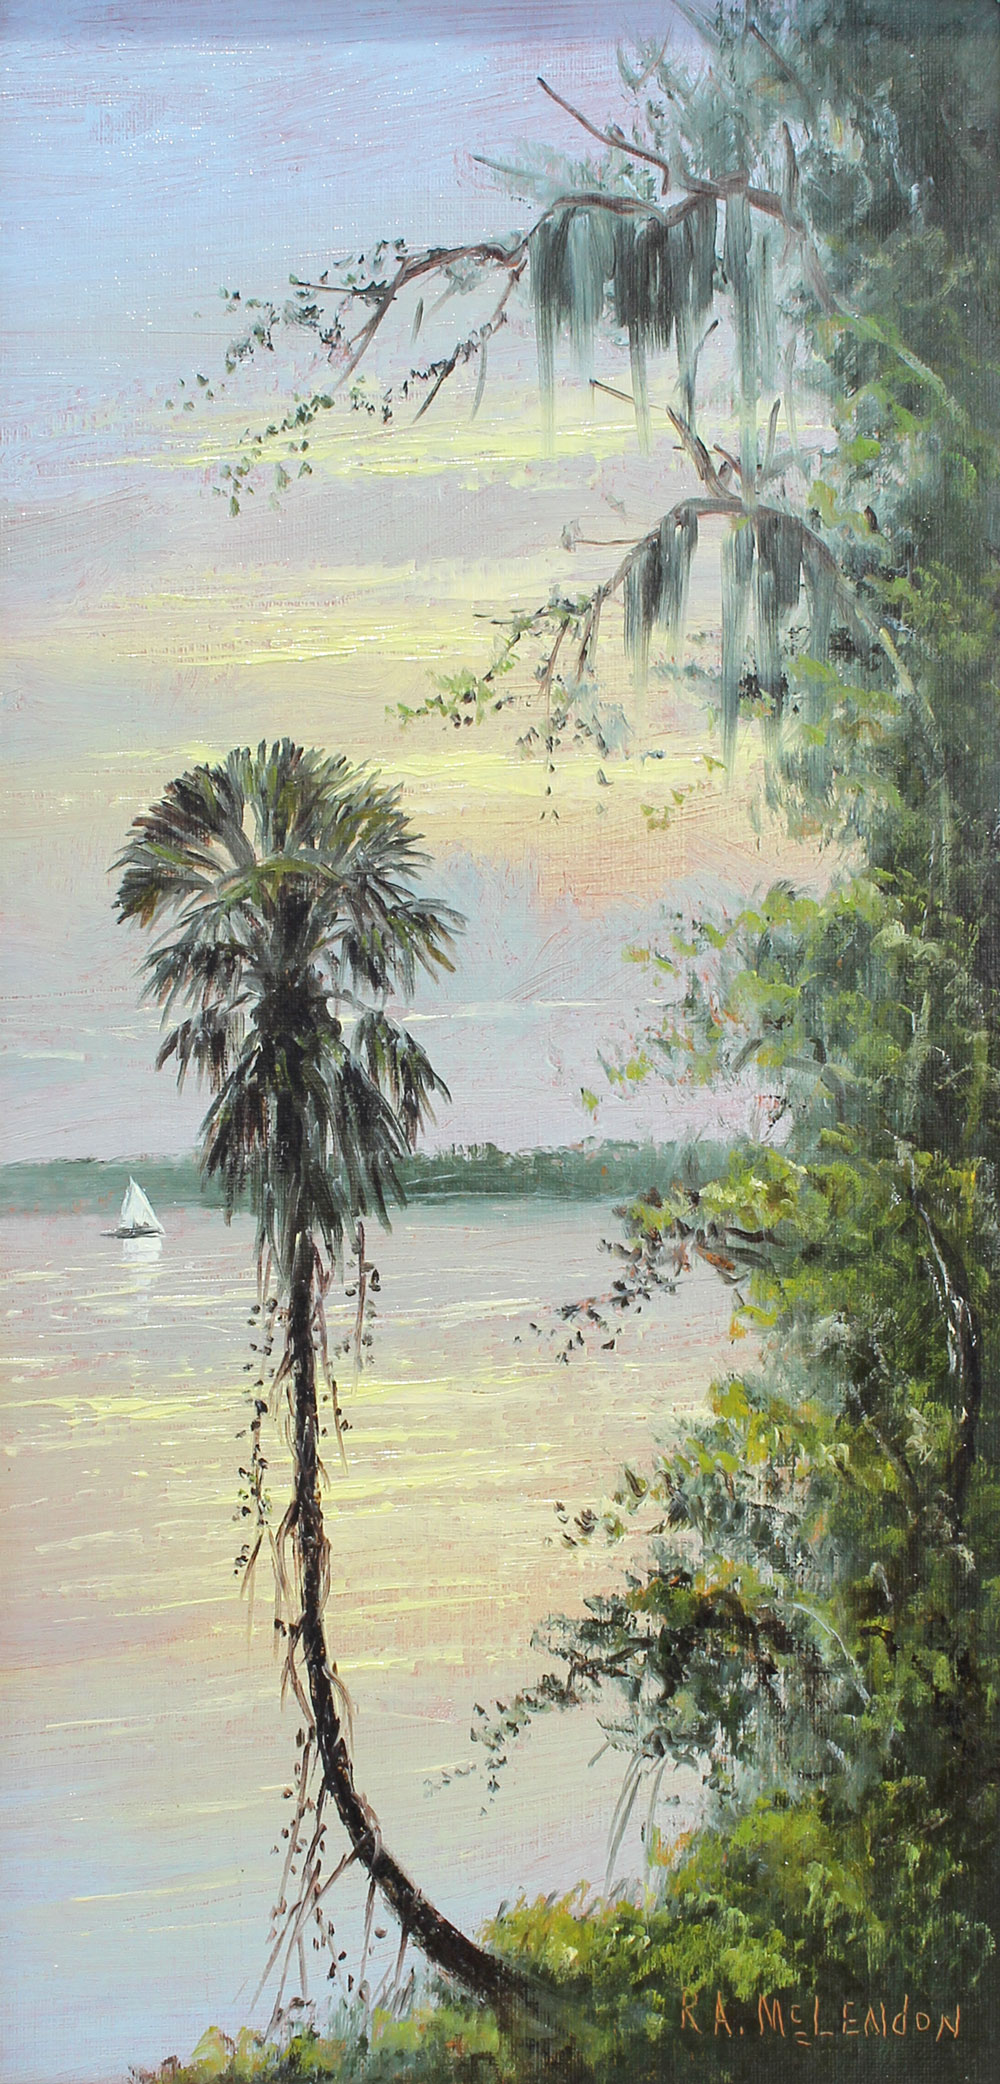 MCLENDON, R.A, (American, 1938): Florida